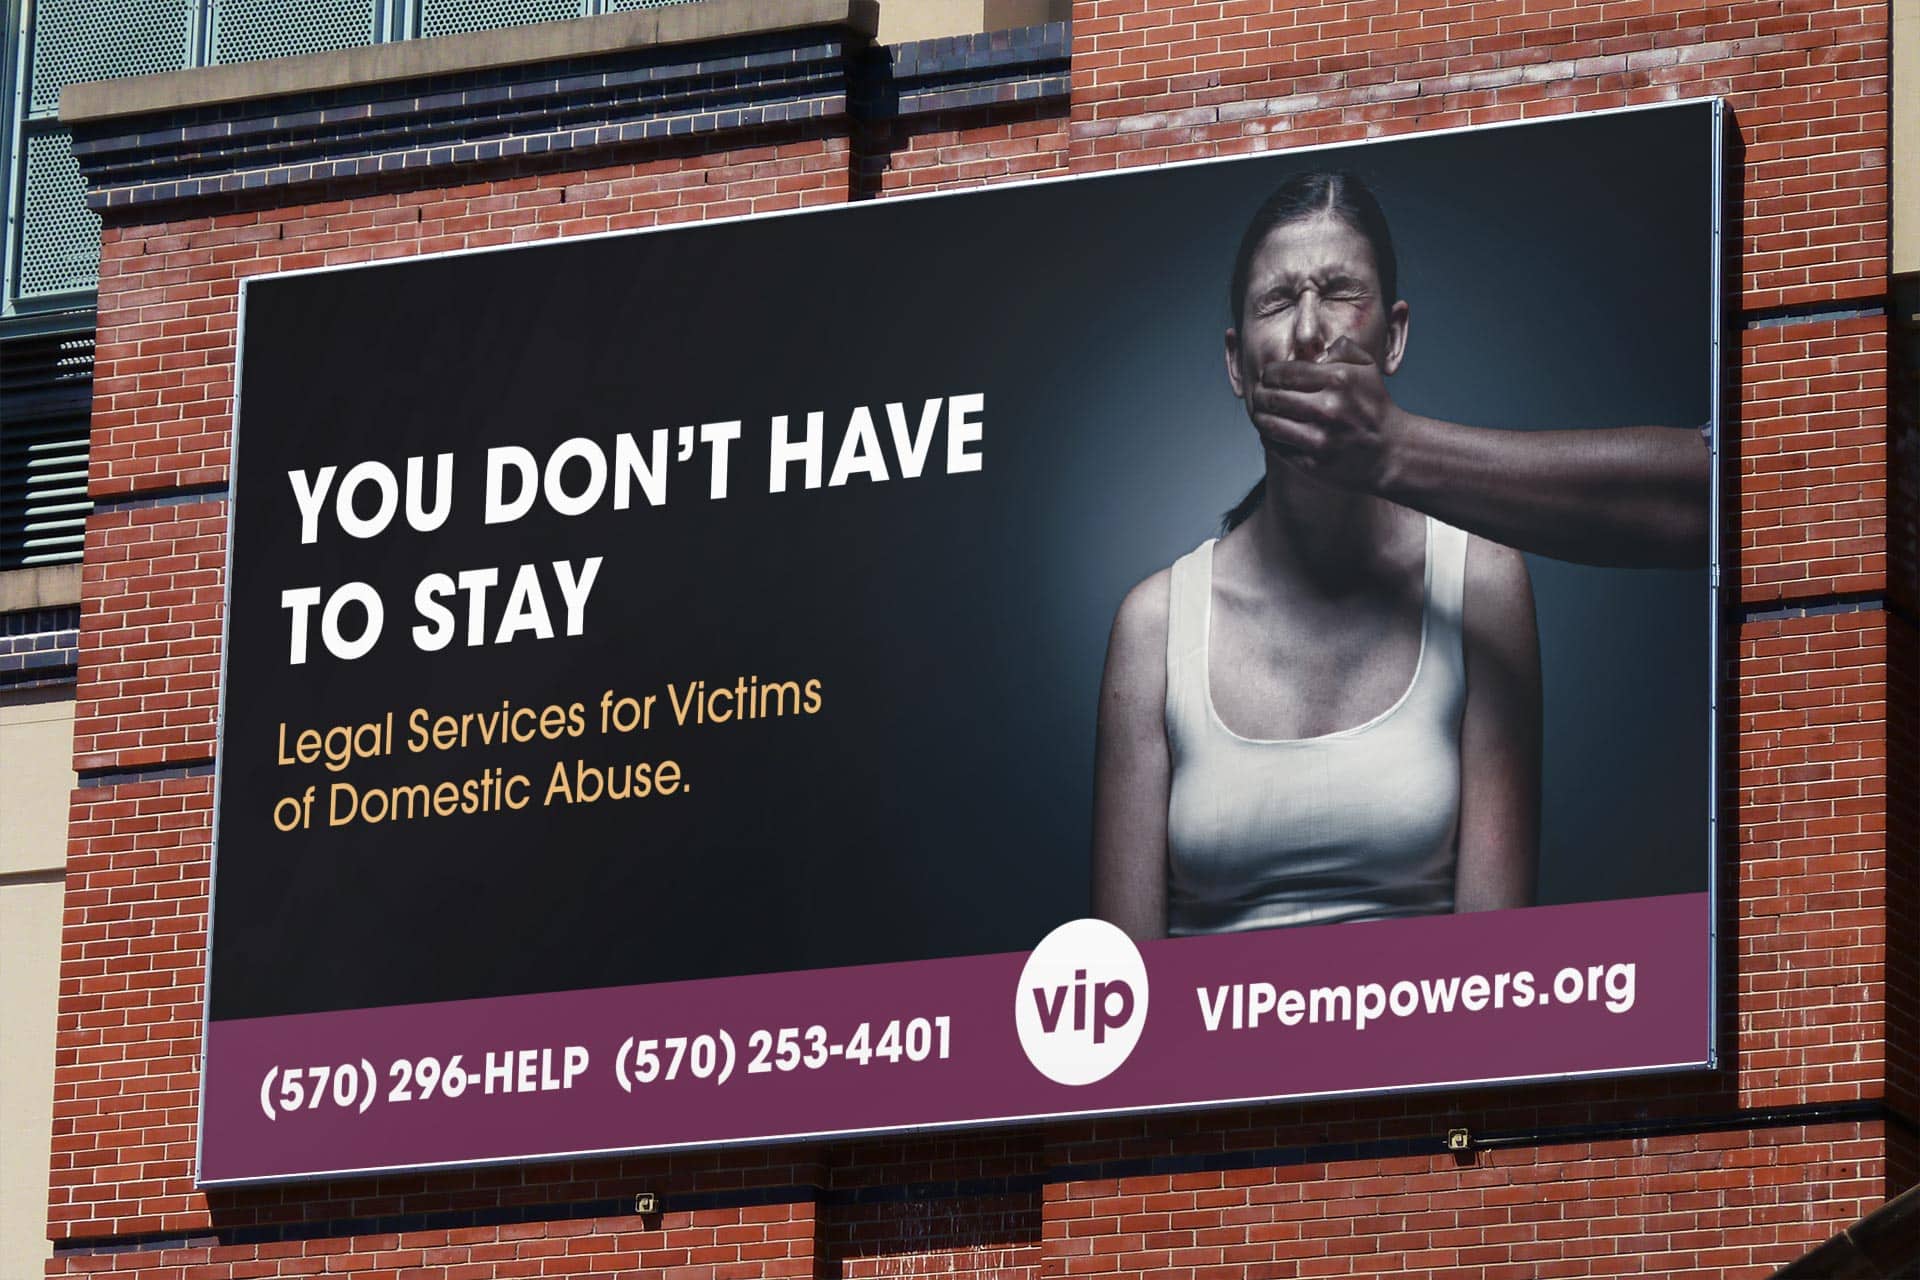 vip billboard about domestic abuse